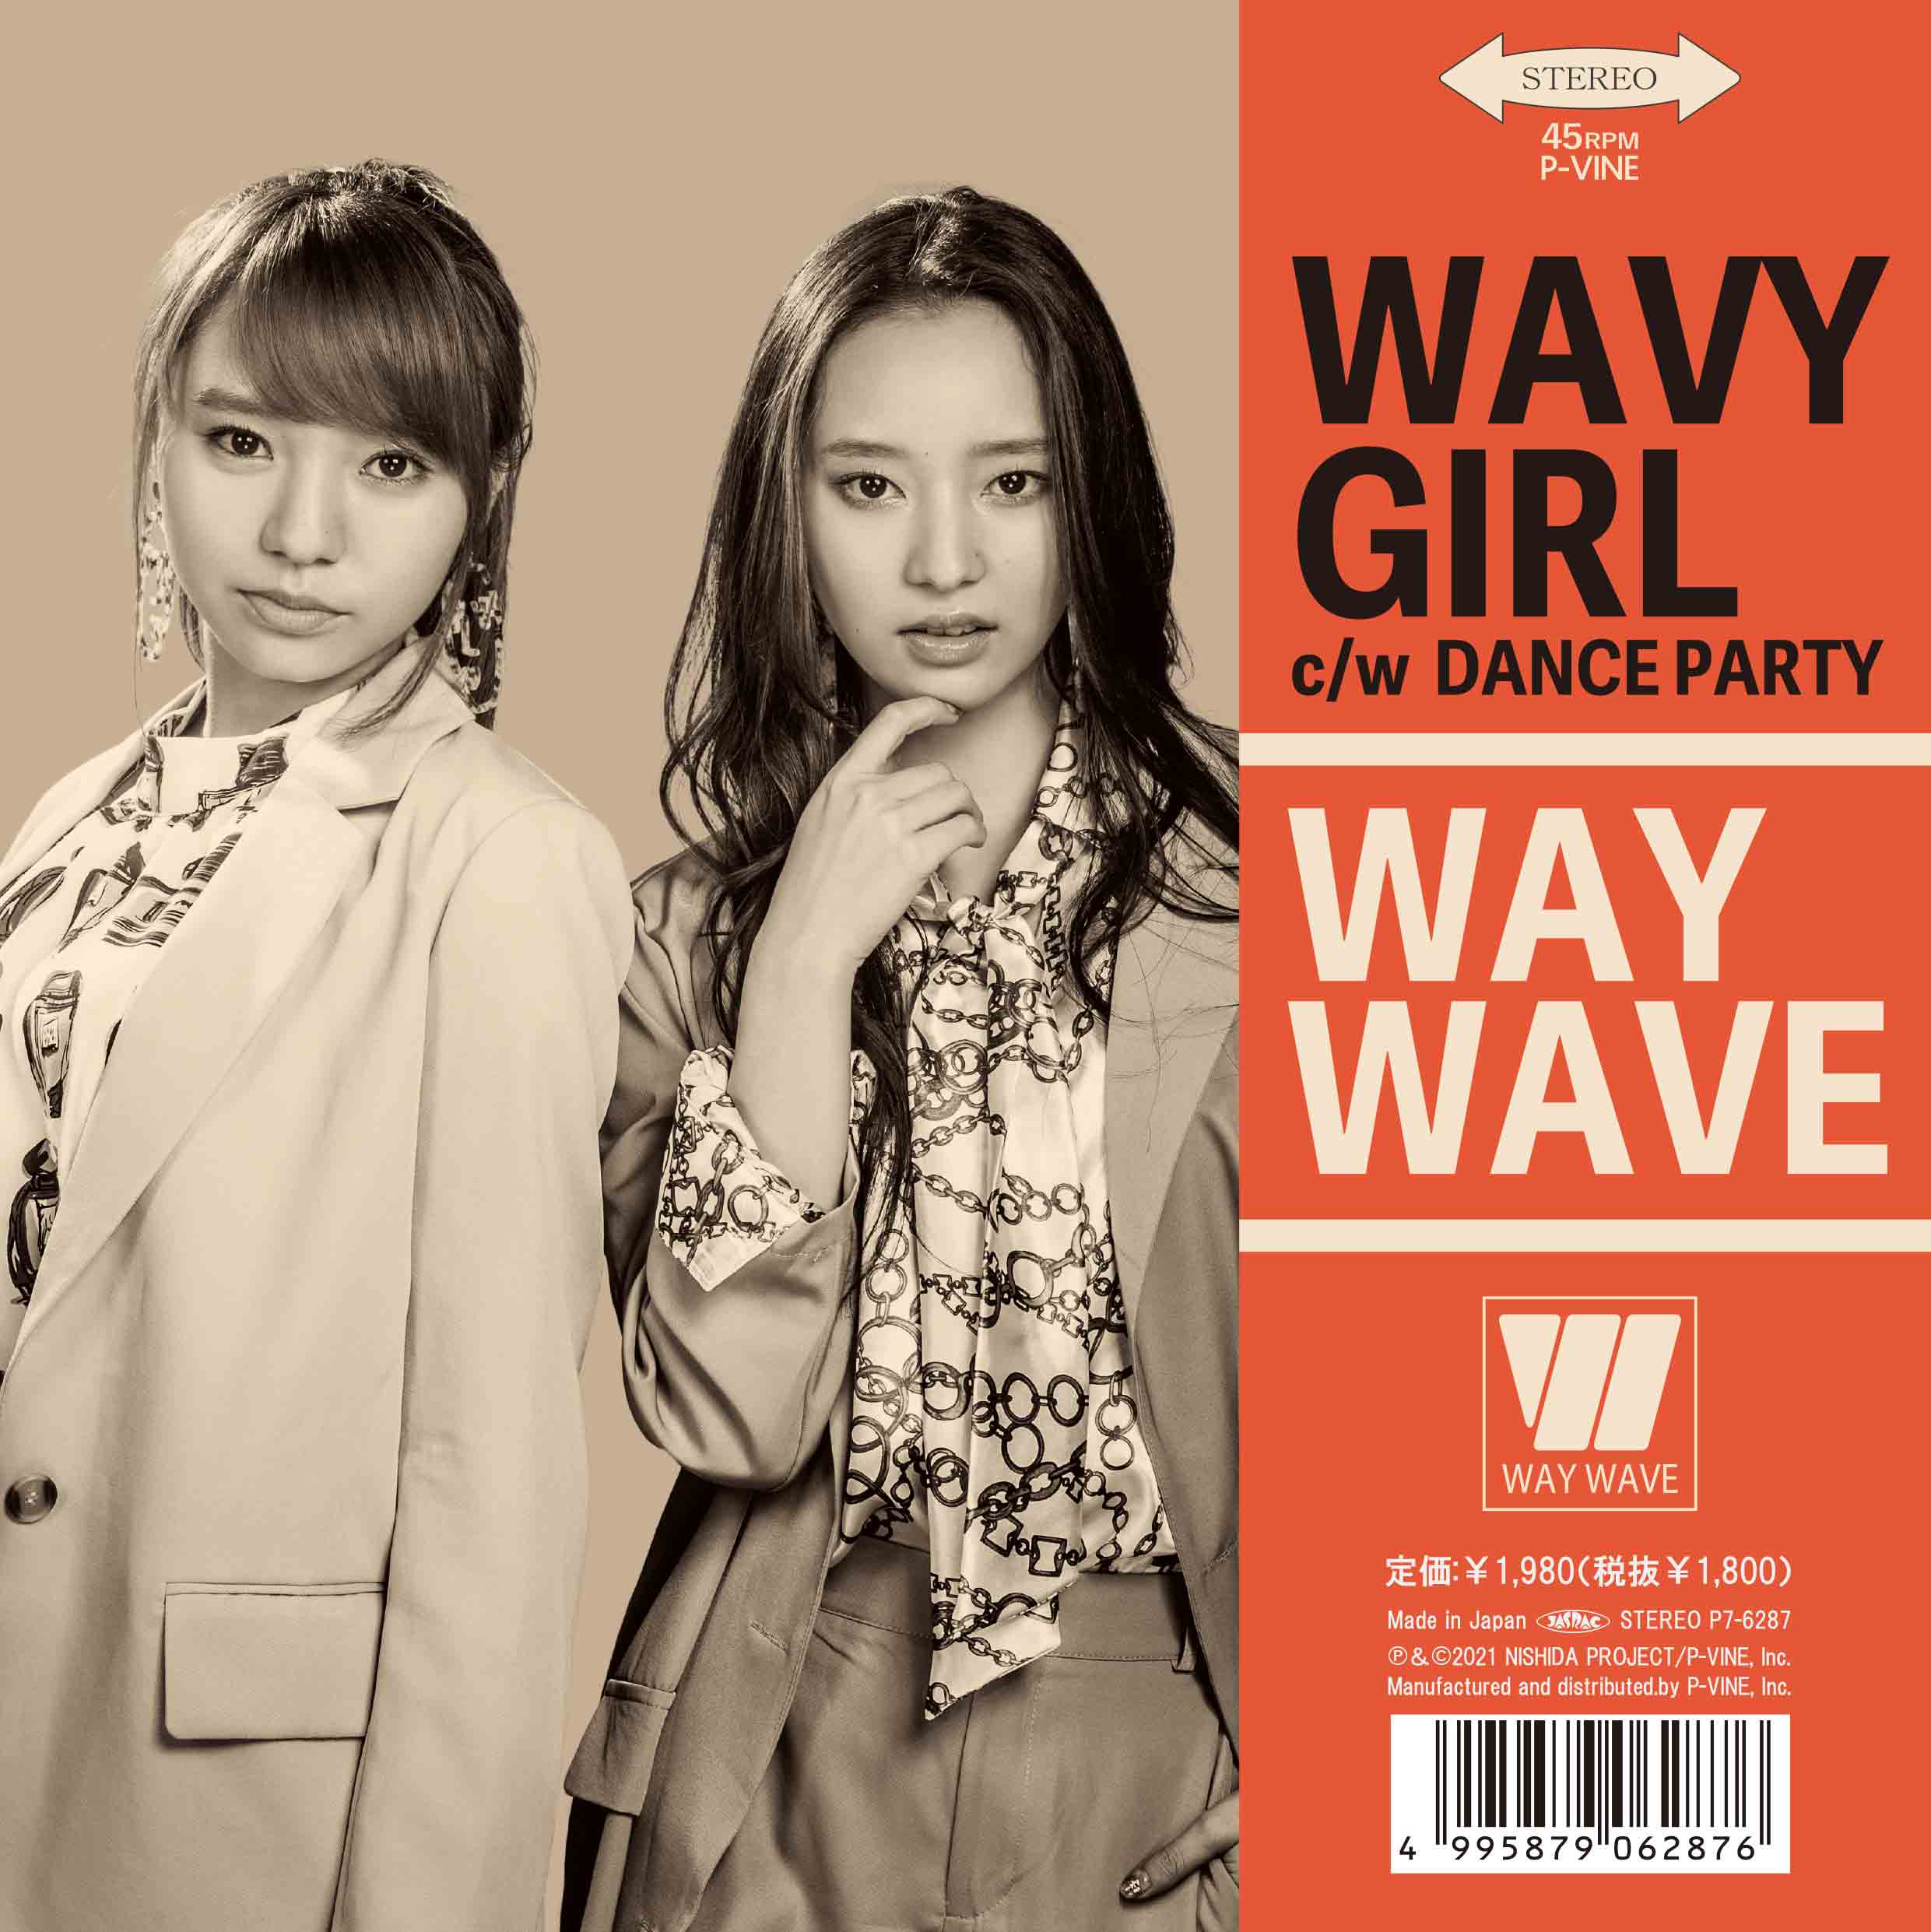 WAY WAVE「Wavy Girl c/w Dance Party」